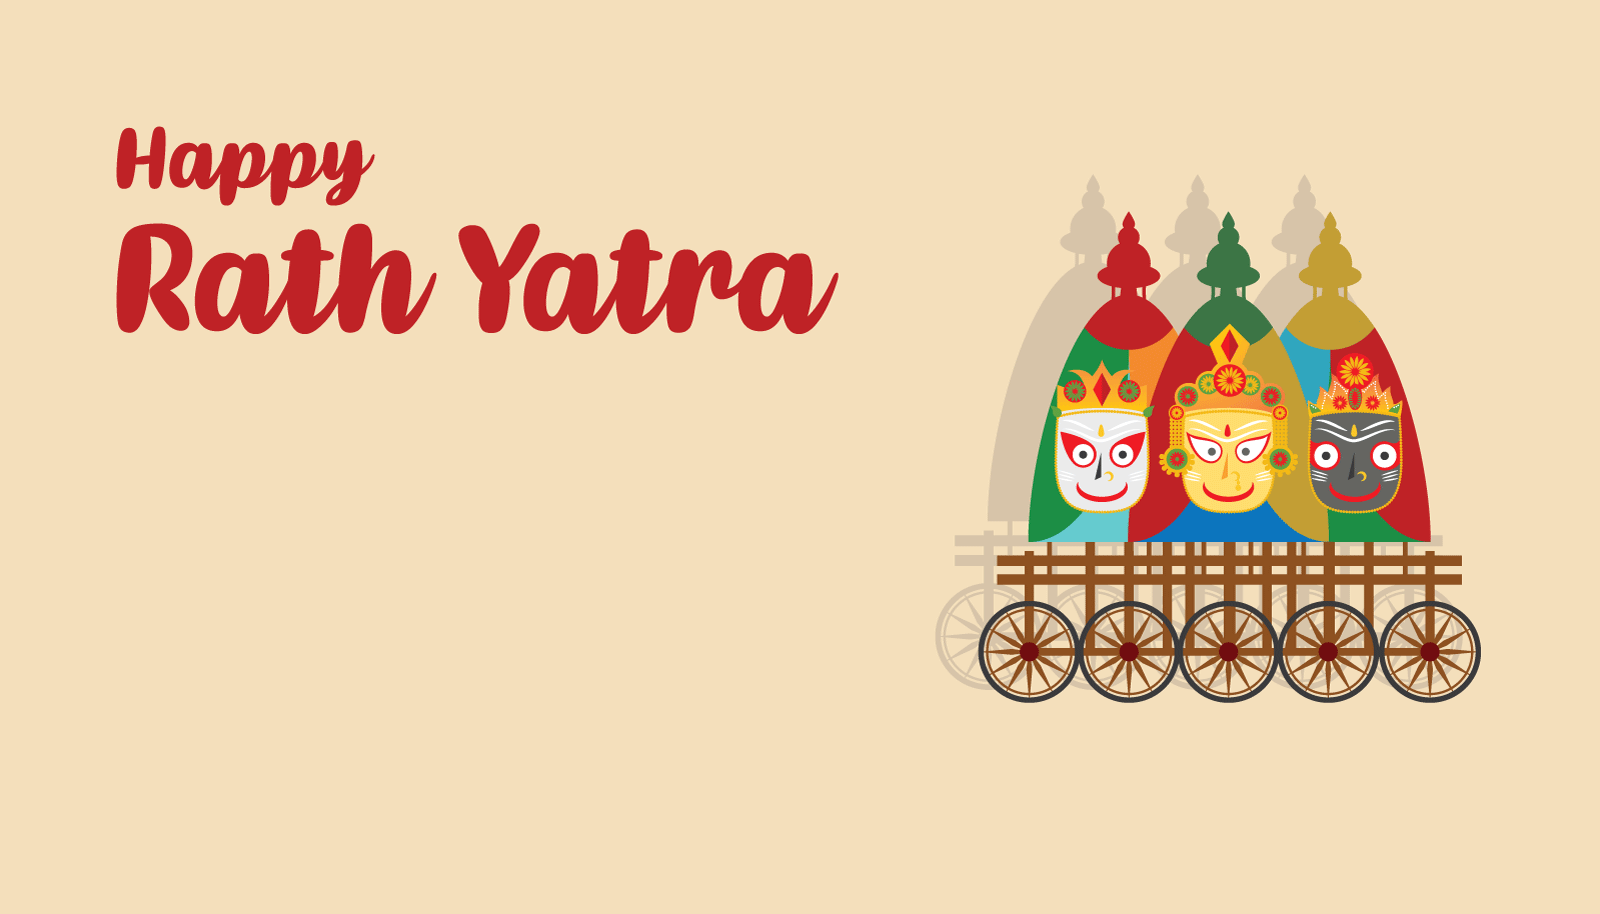 Rath Yatra Indian Festival background template vector flat design